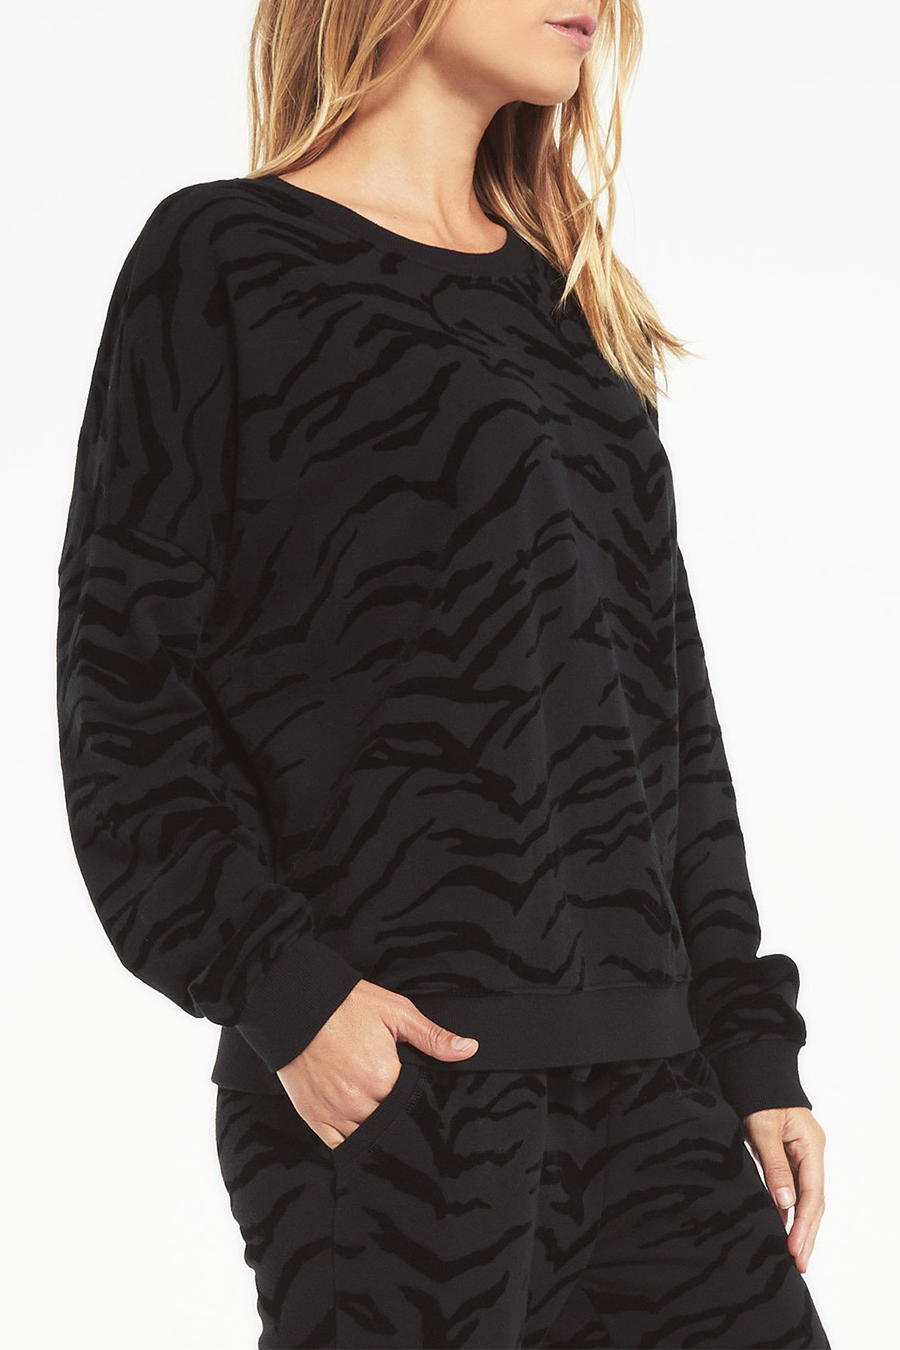 Marin Tiger Flocked Sweatshirt | Black - Main Image Number 2 of 2